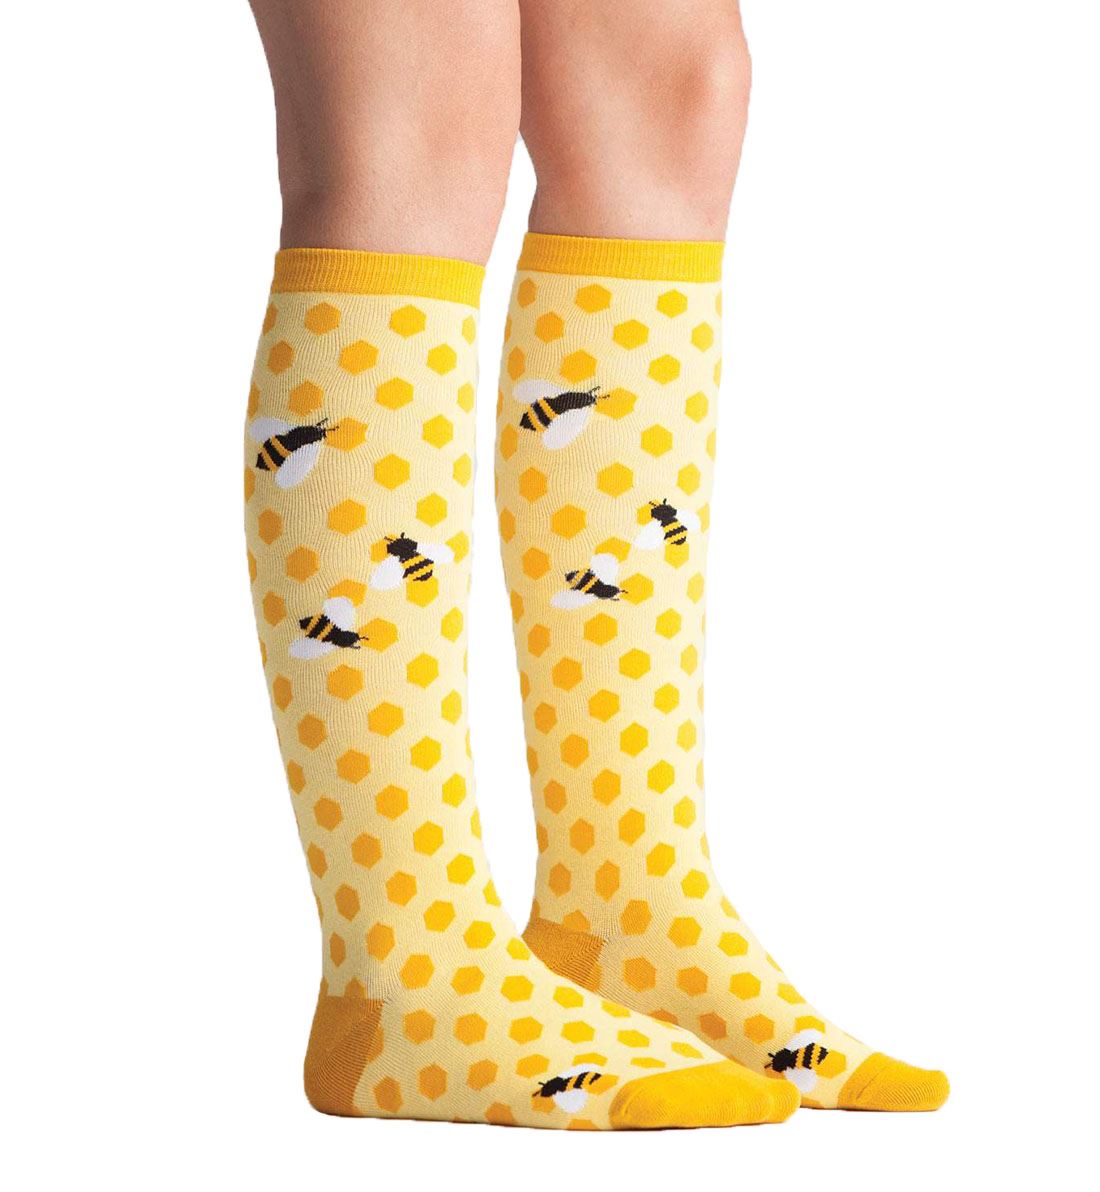 SOCK it to me Unisex Knee High Socks (f0192),Bee&#39;s Knees - Bee&#39;s Knees,One Size